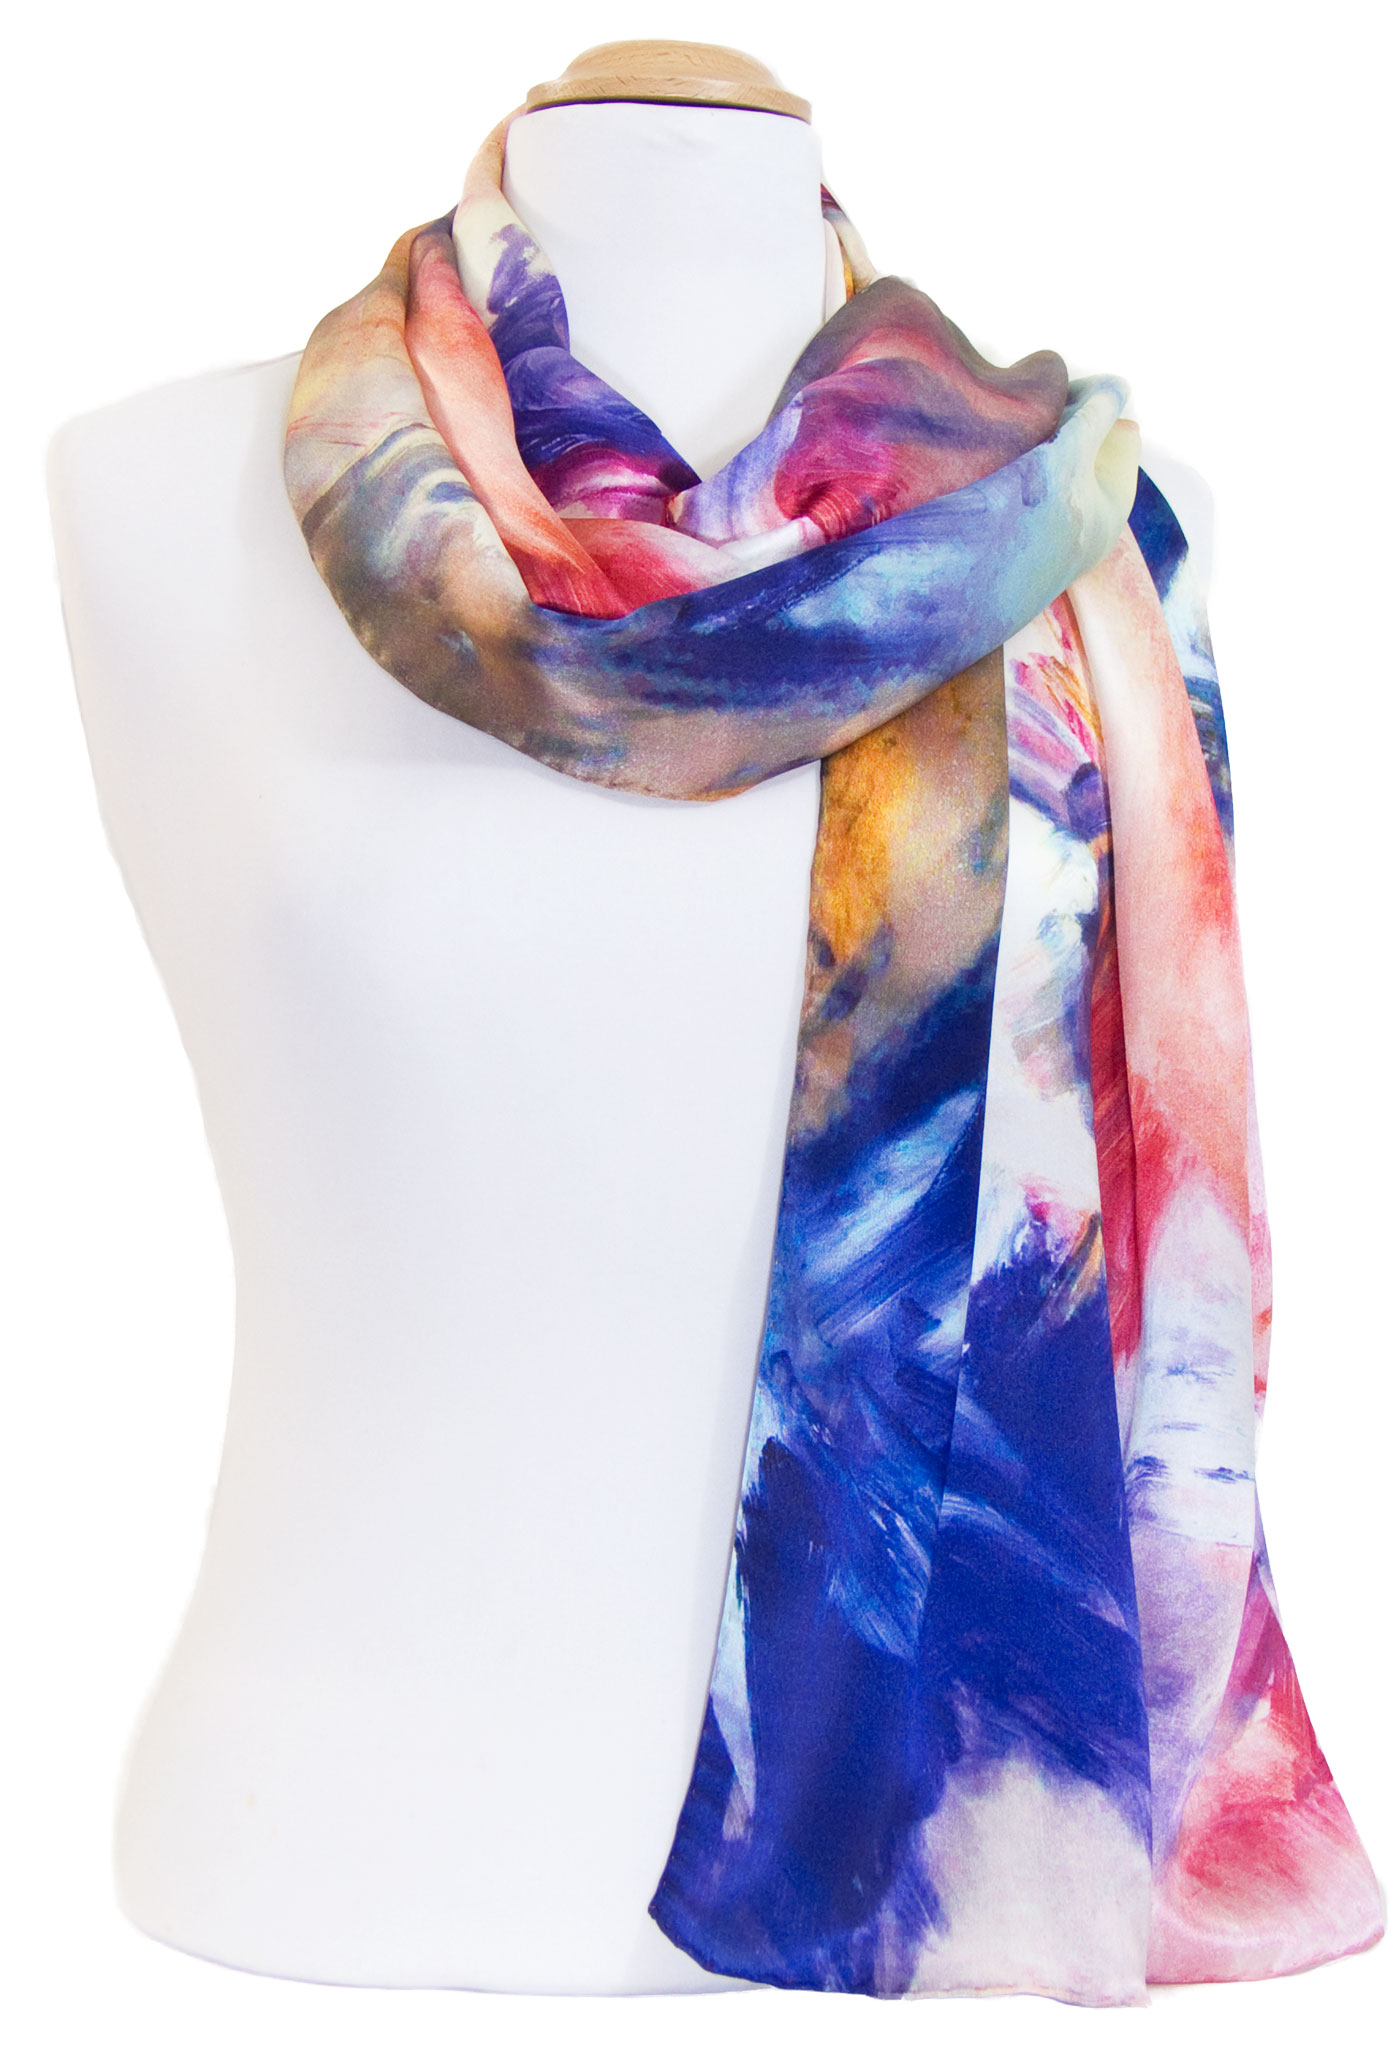 Écharpe soie foulard foulard Chiffon платок Designer 60x60cm FR expédition #10